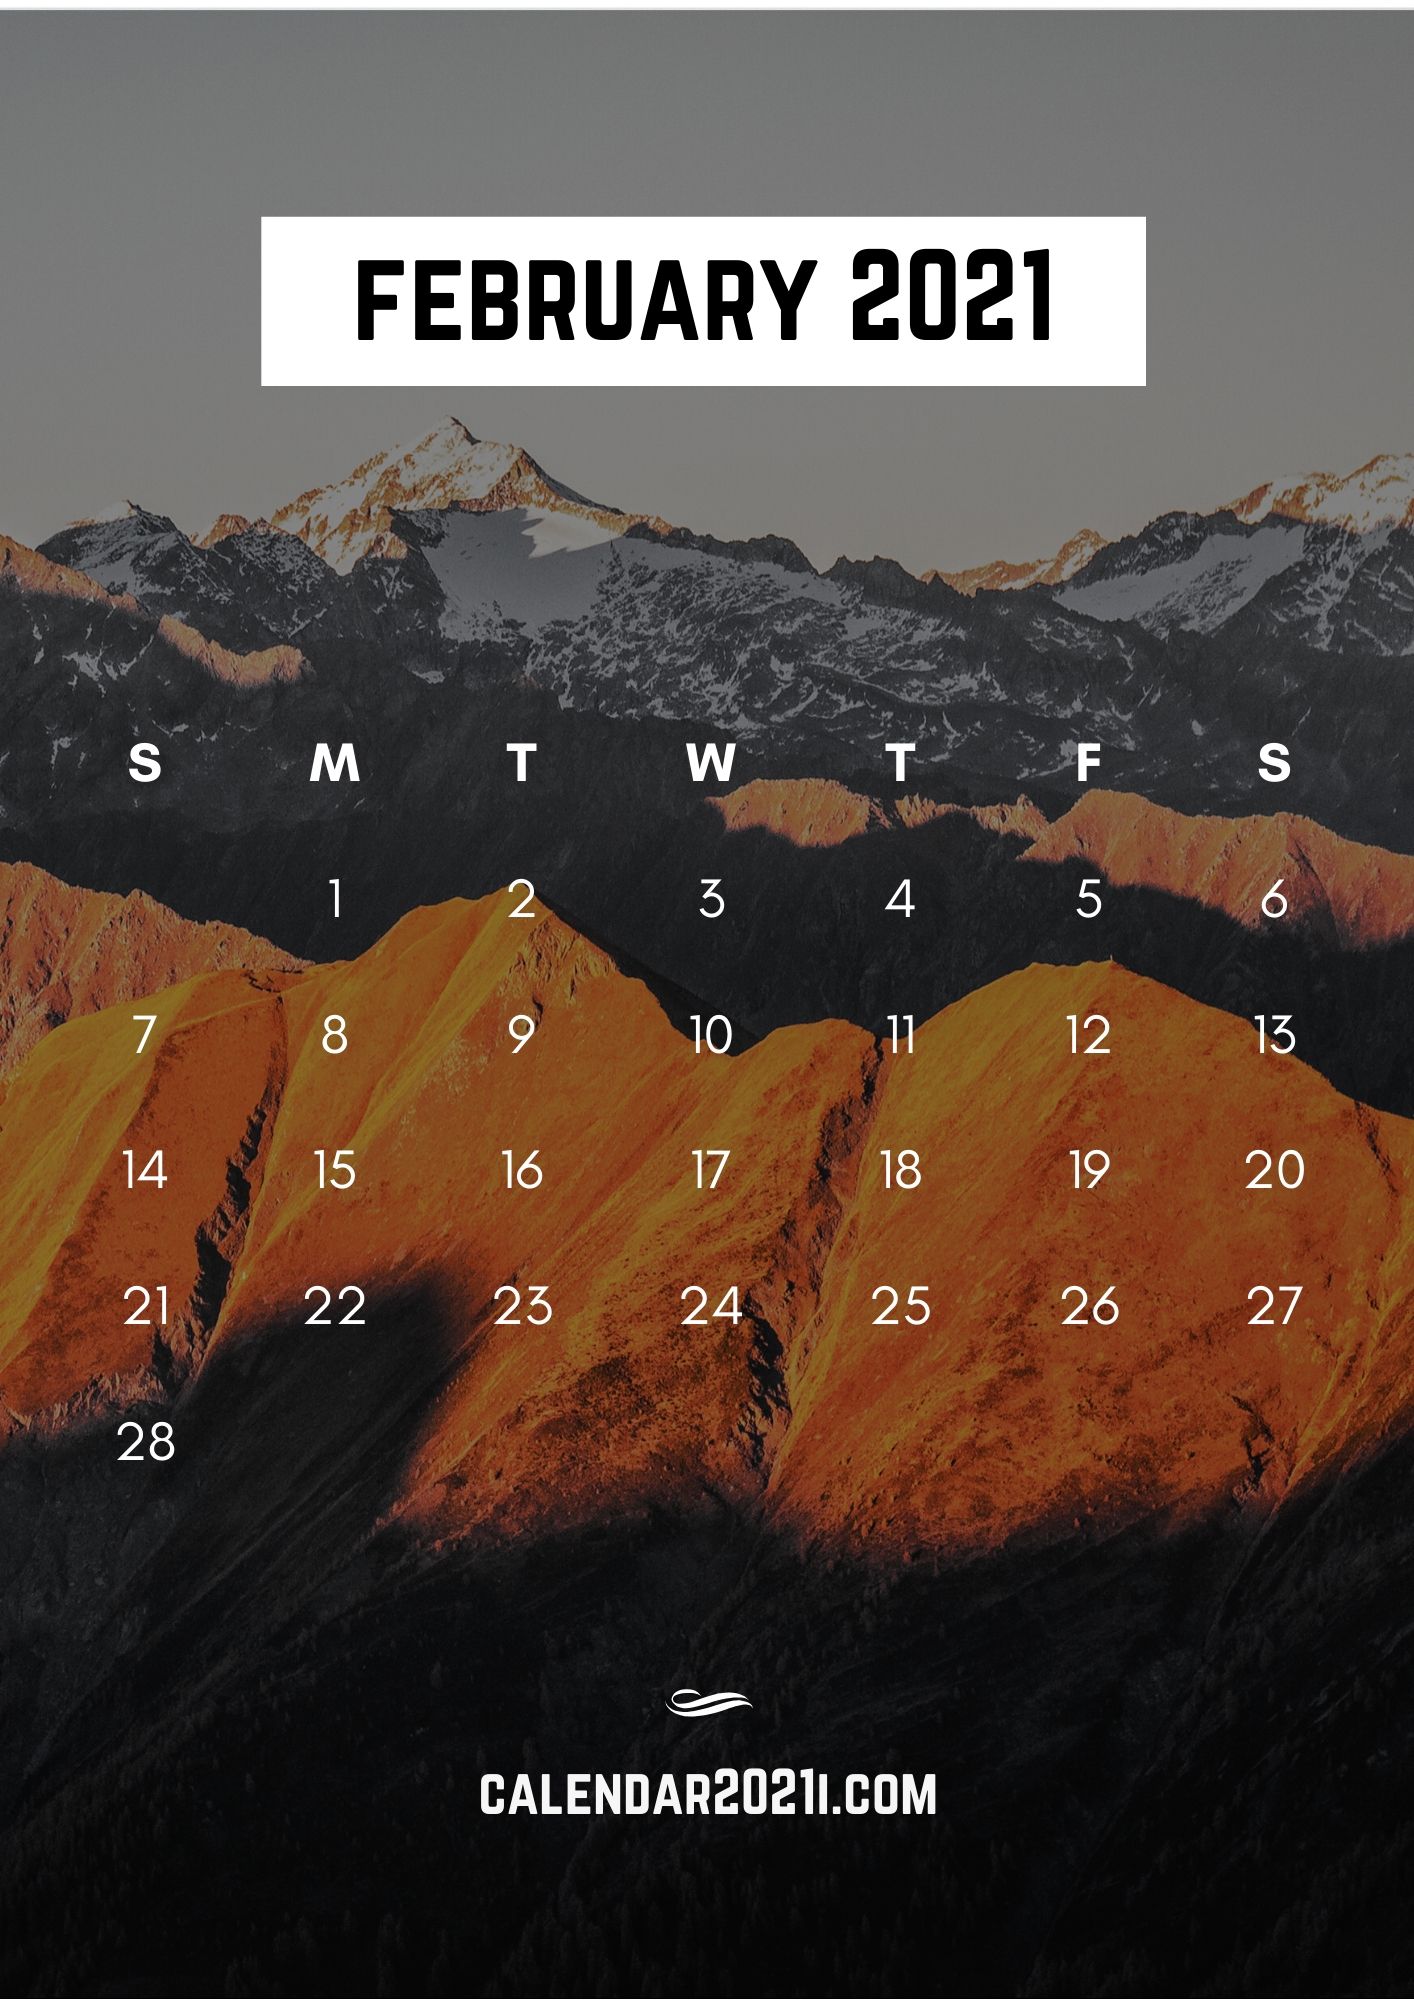 February 2021 iPhone Calendar Wallpaper